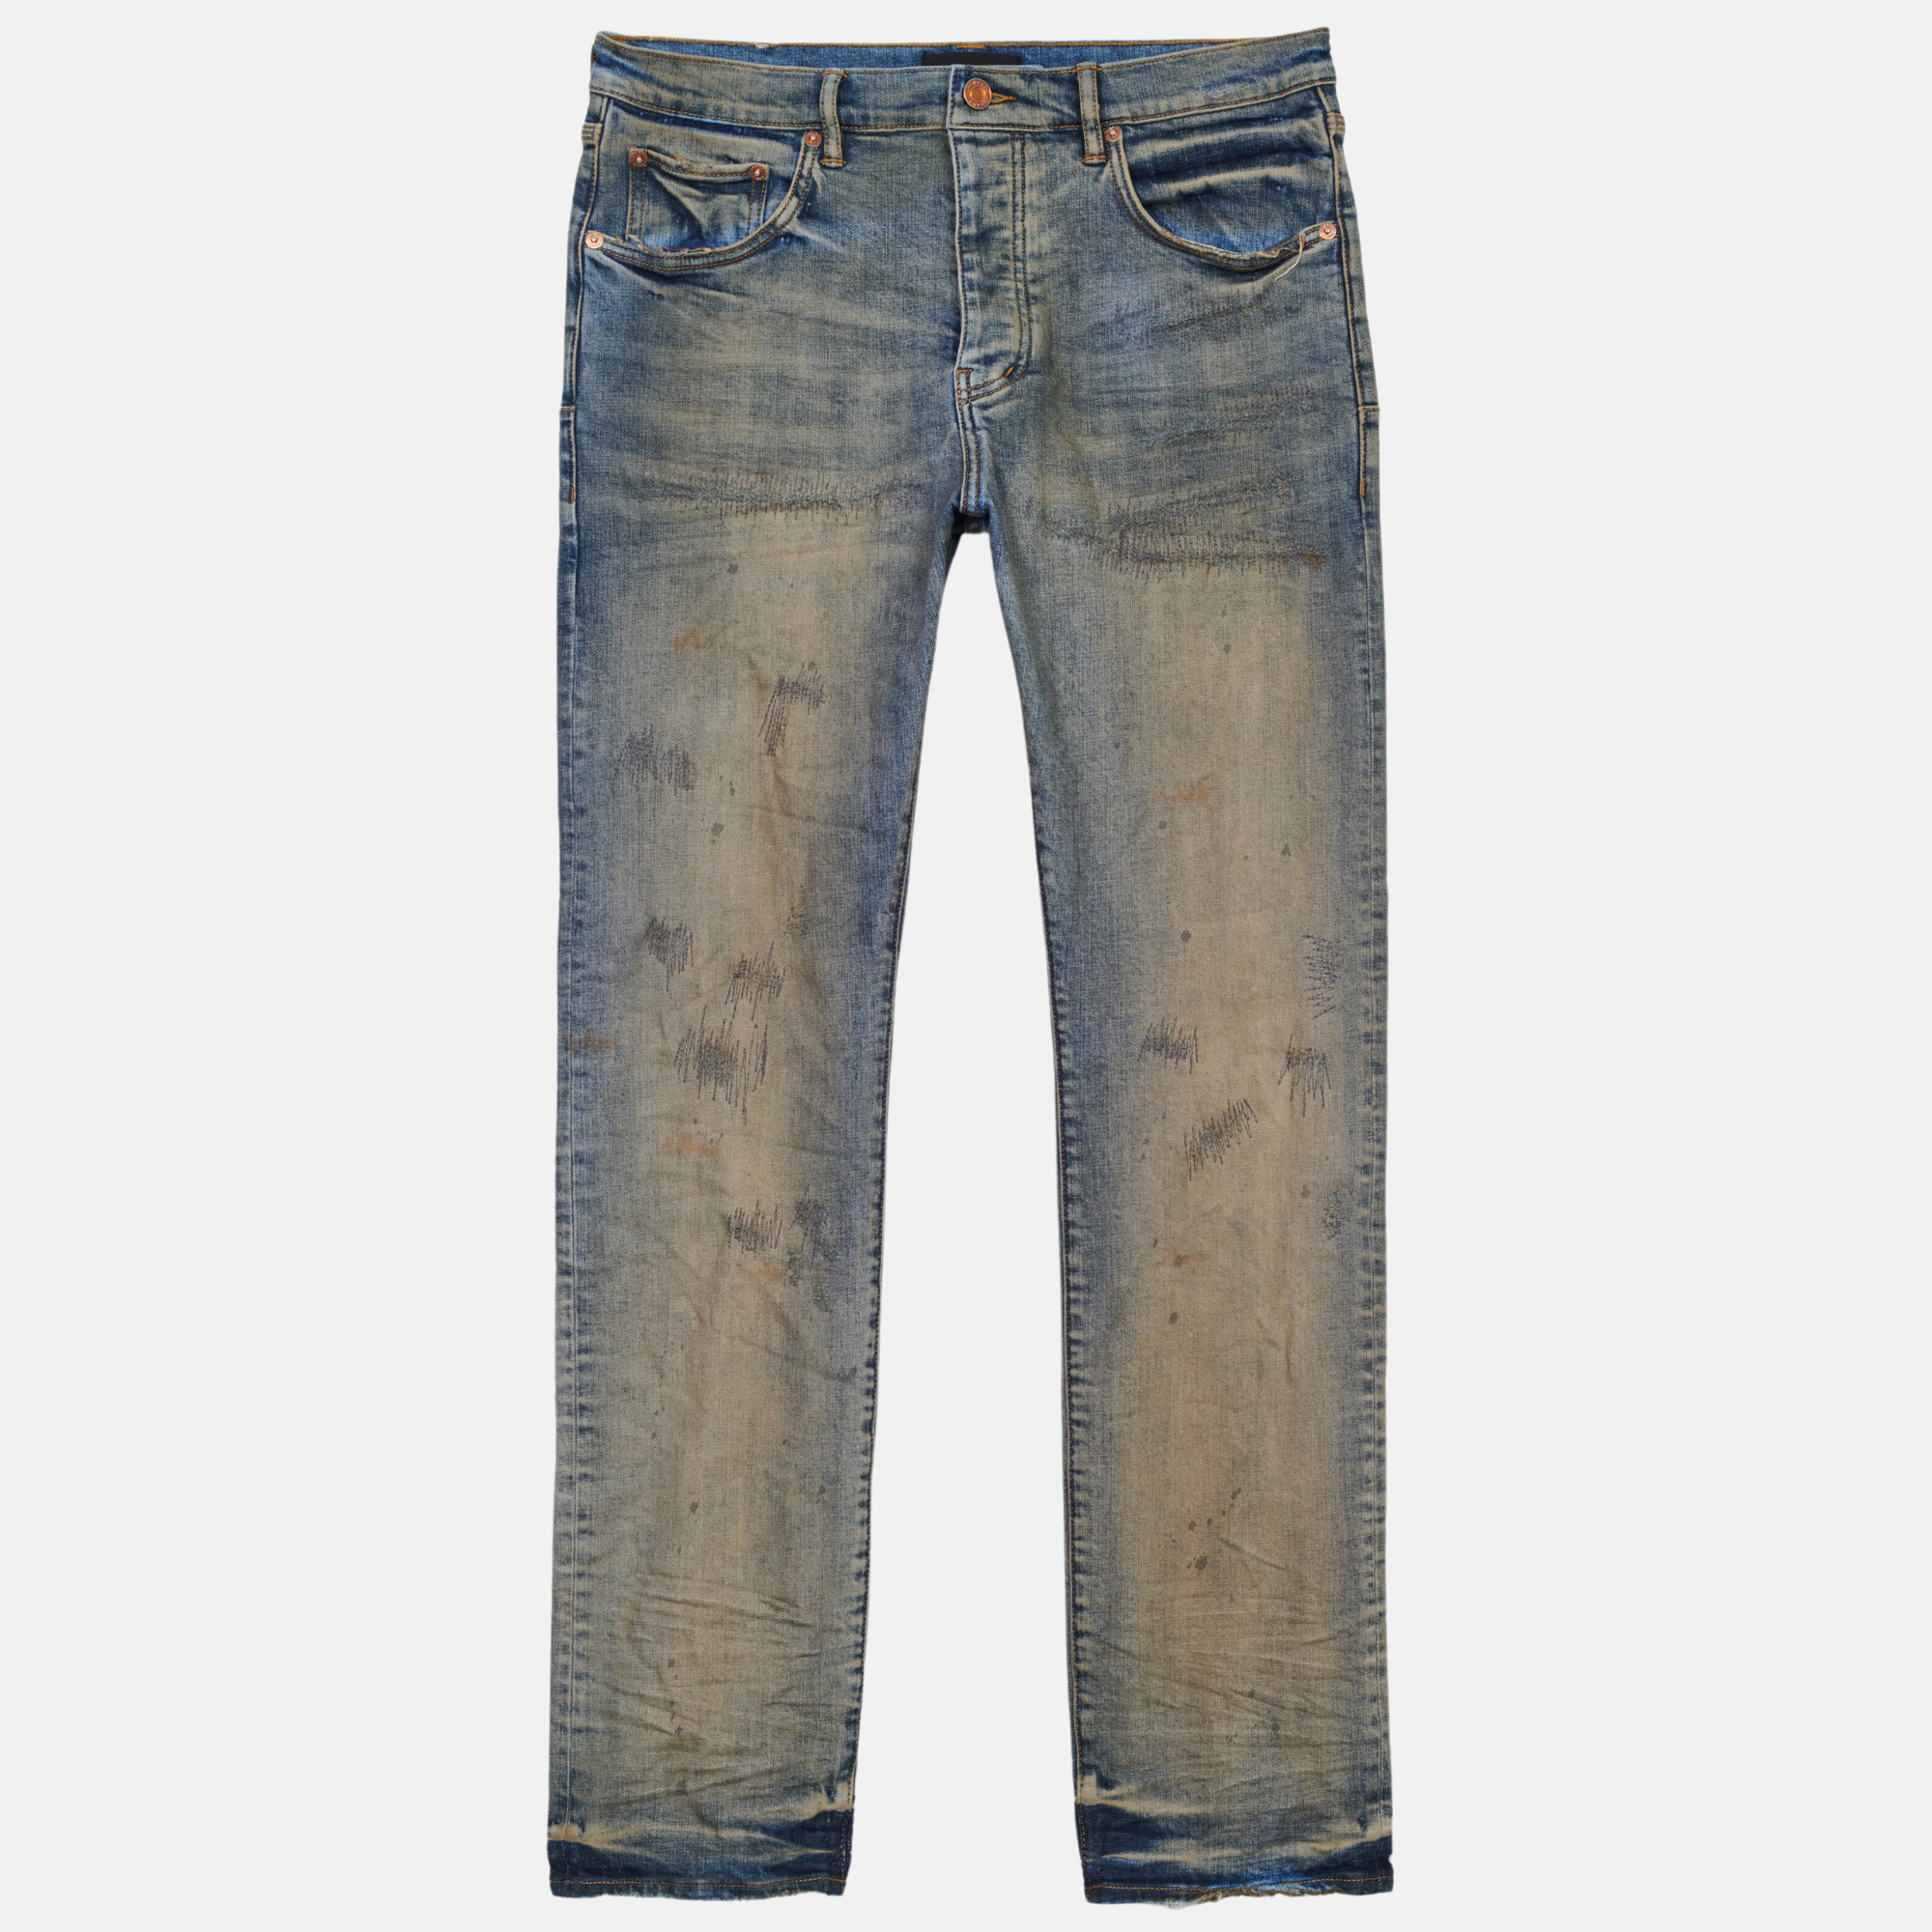 Buy Indigo Jeans for Men by Barrels And Oil Online